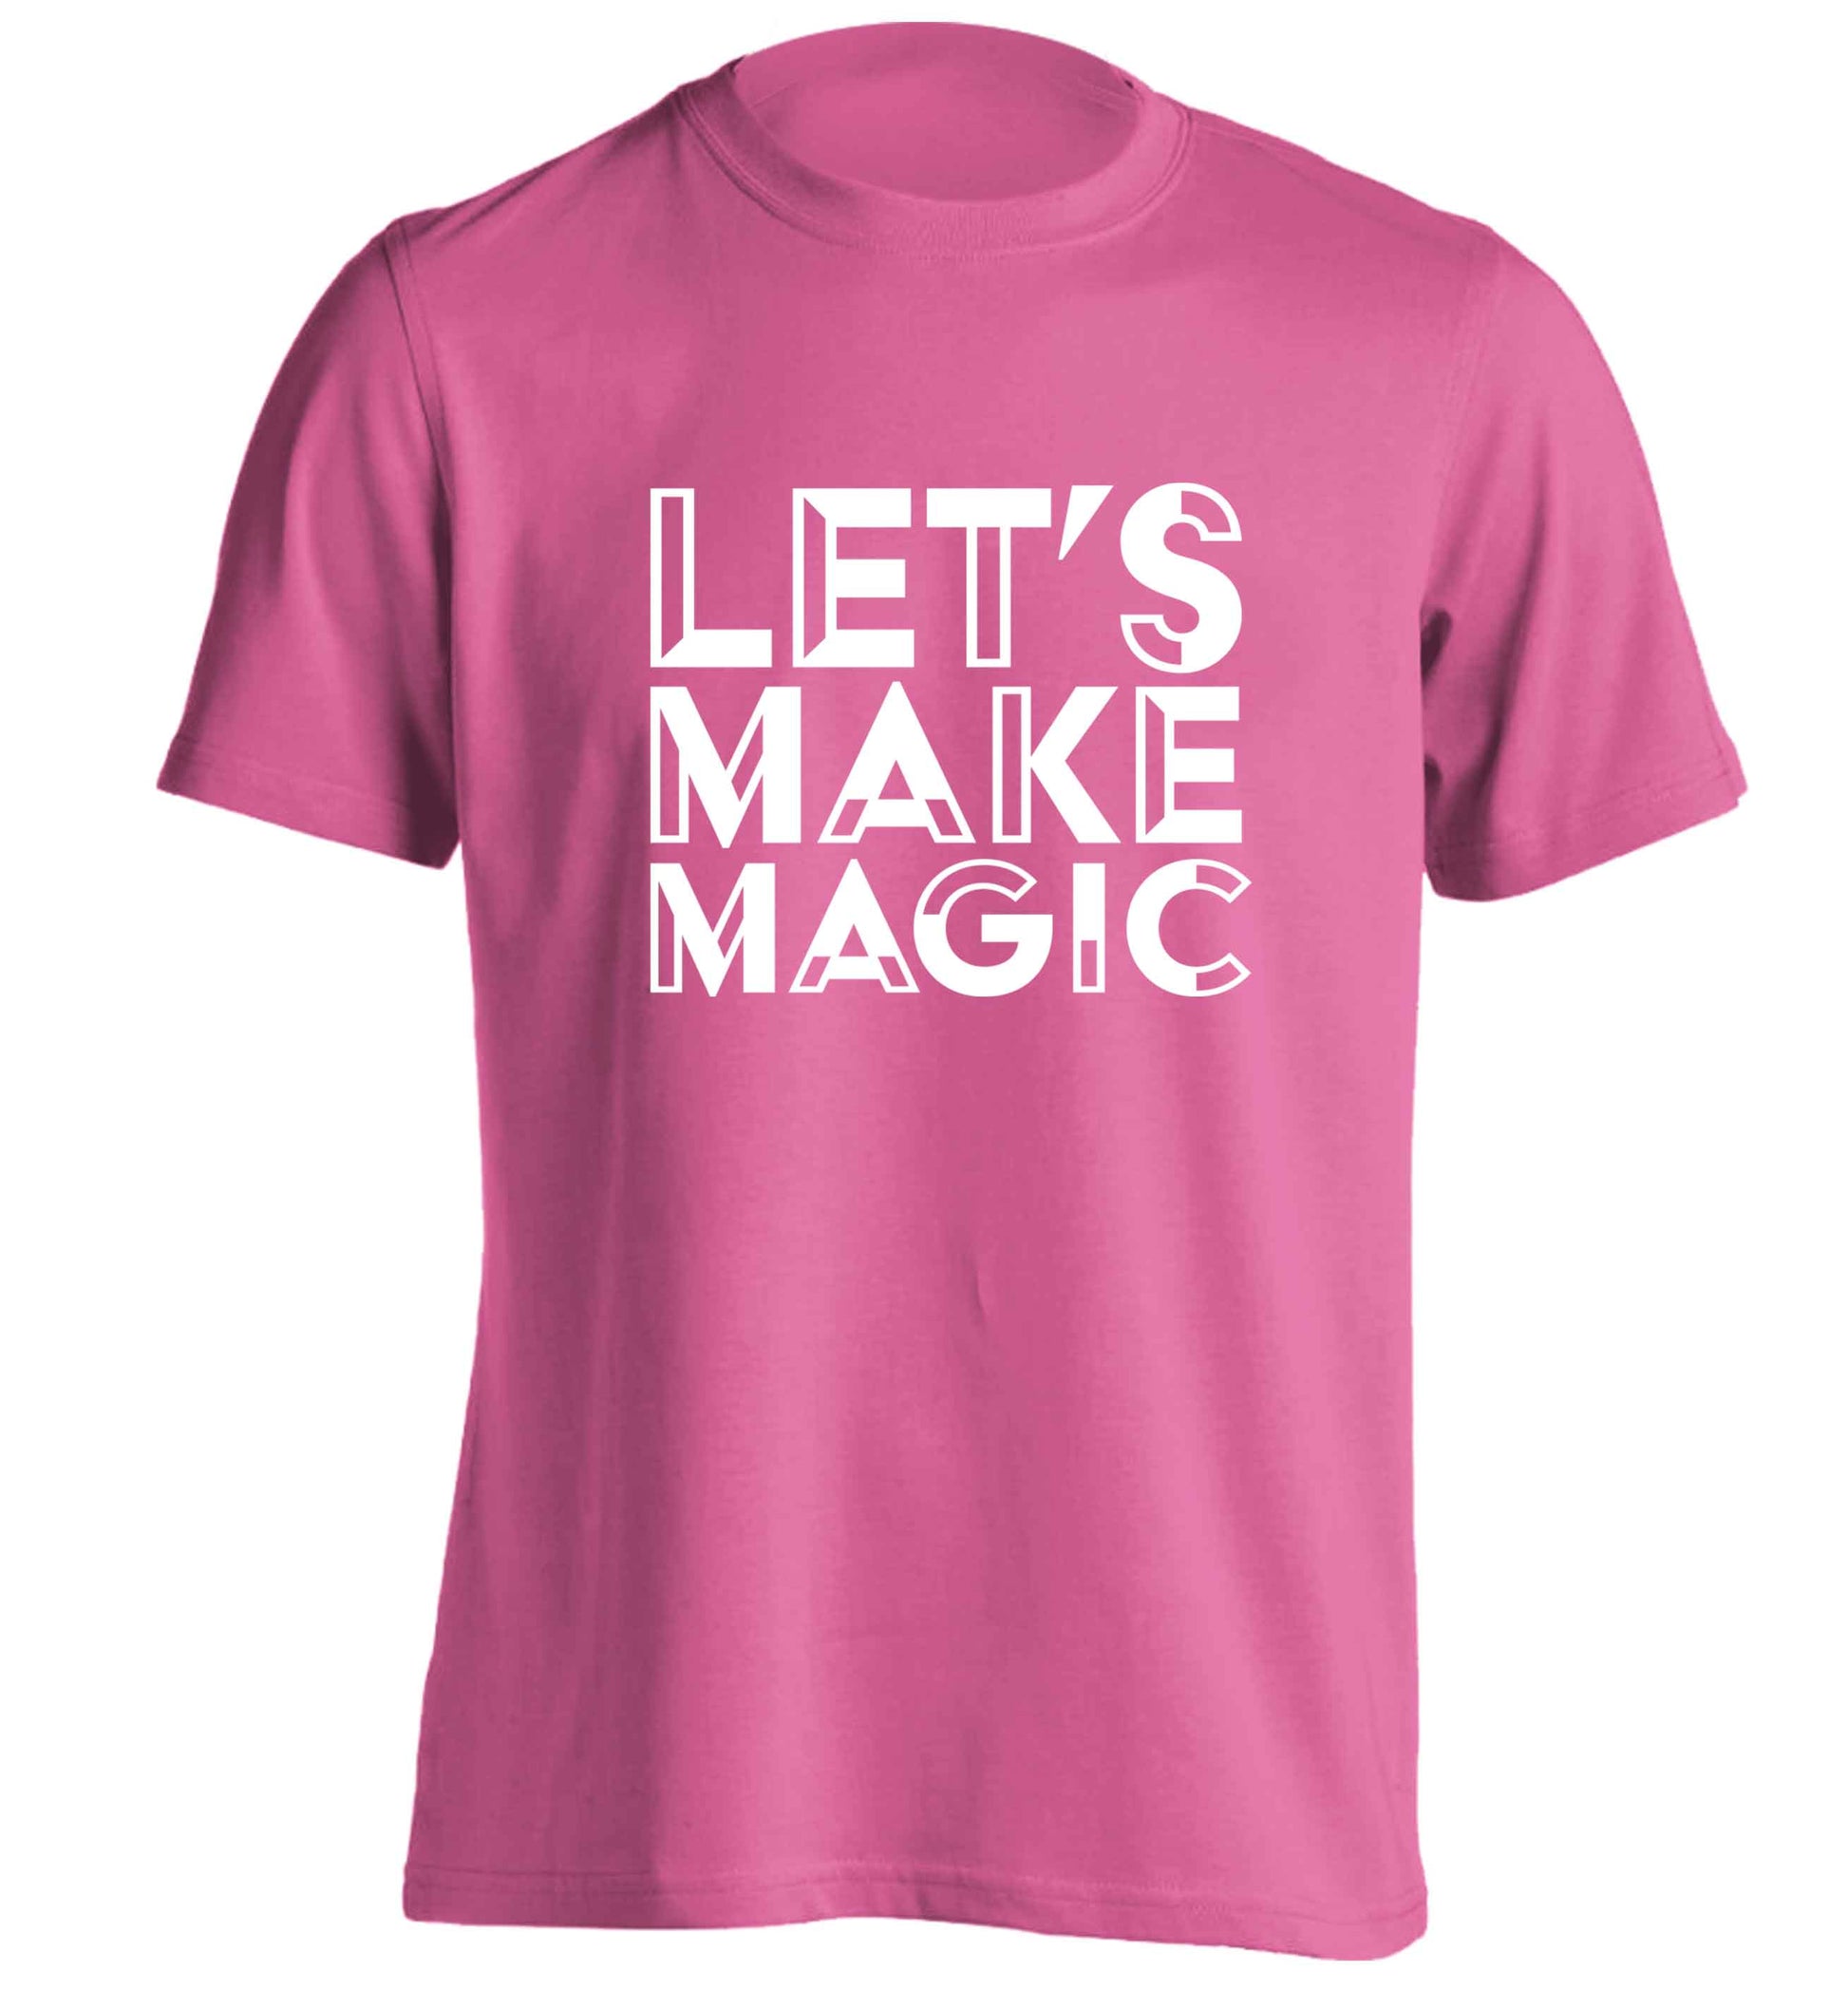 Let's make magic adults unisex pink Tshirt 2XL